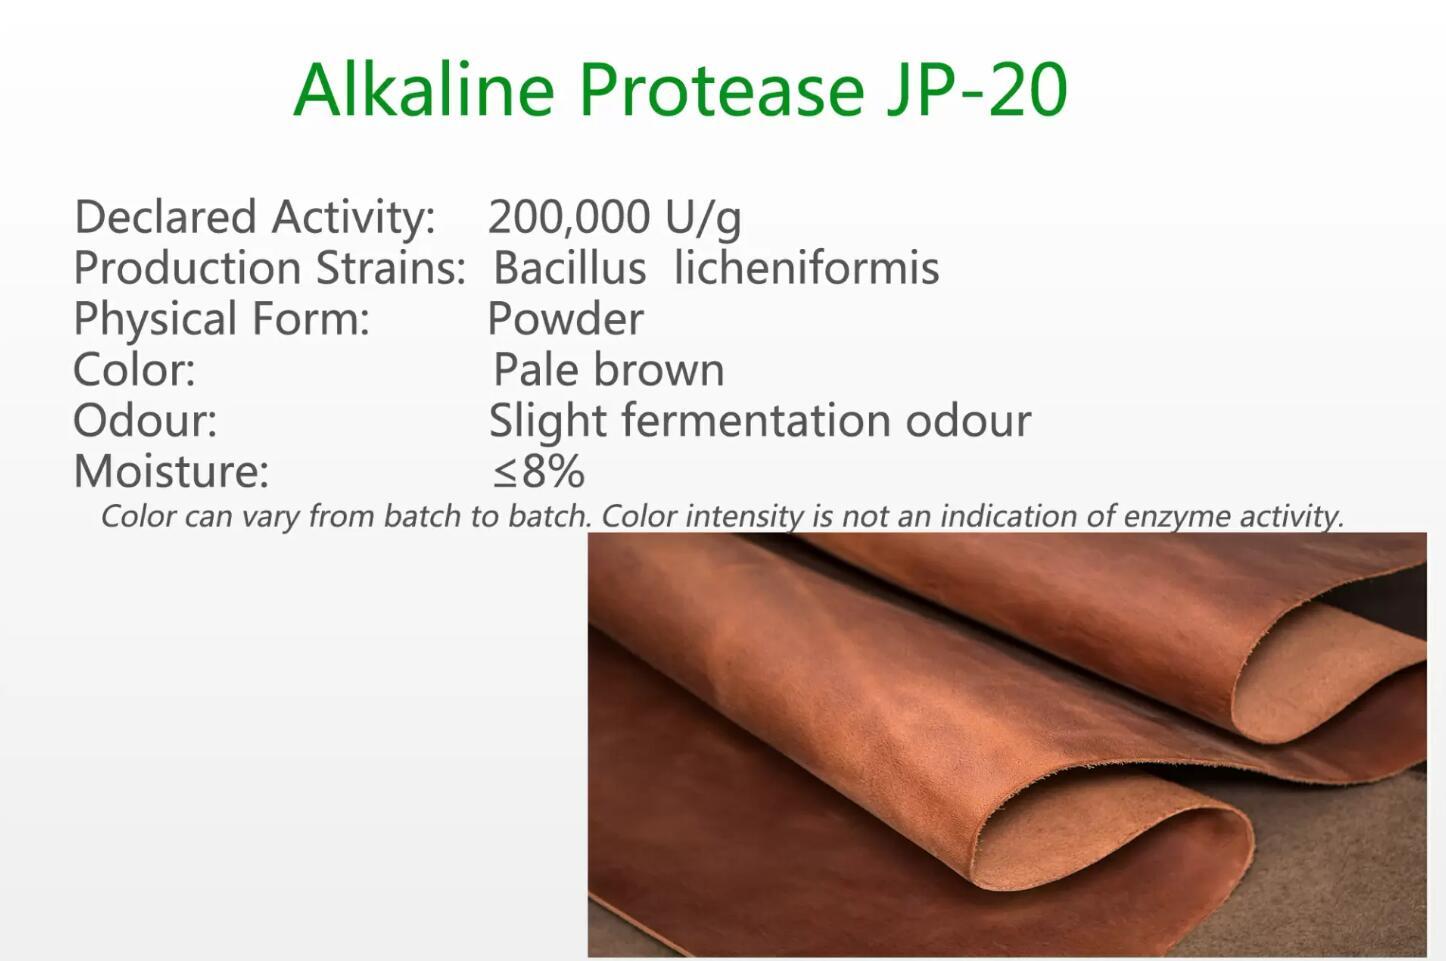 Alkaline Protease JP-20